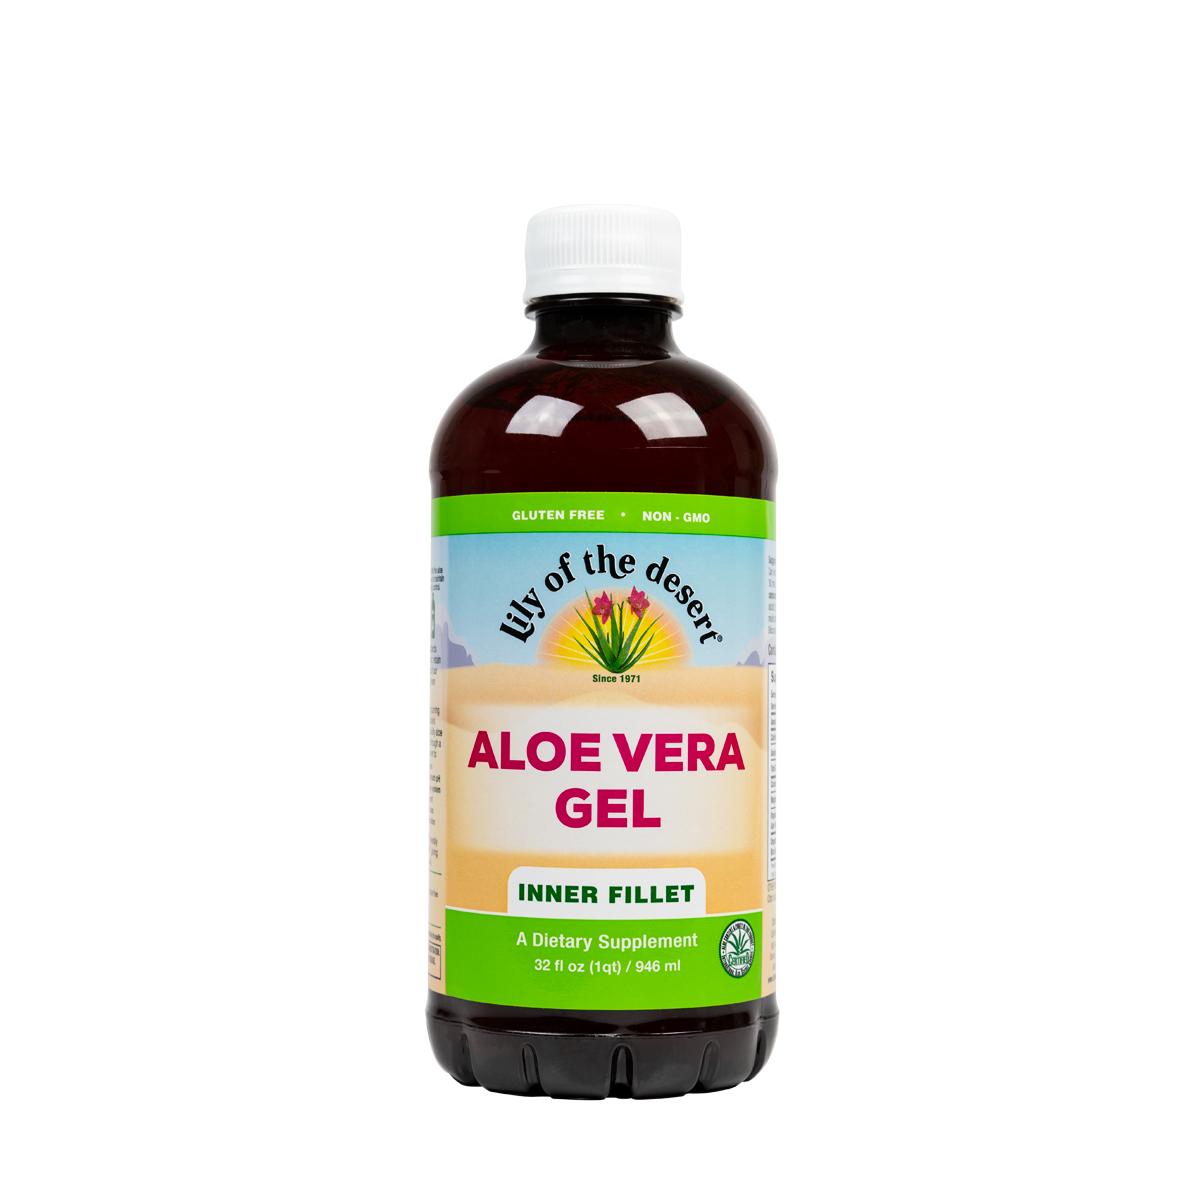 Primary image of Aloe Vera Gel